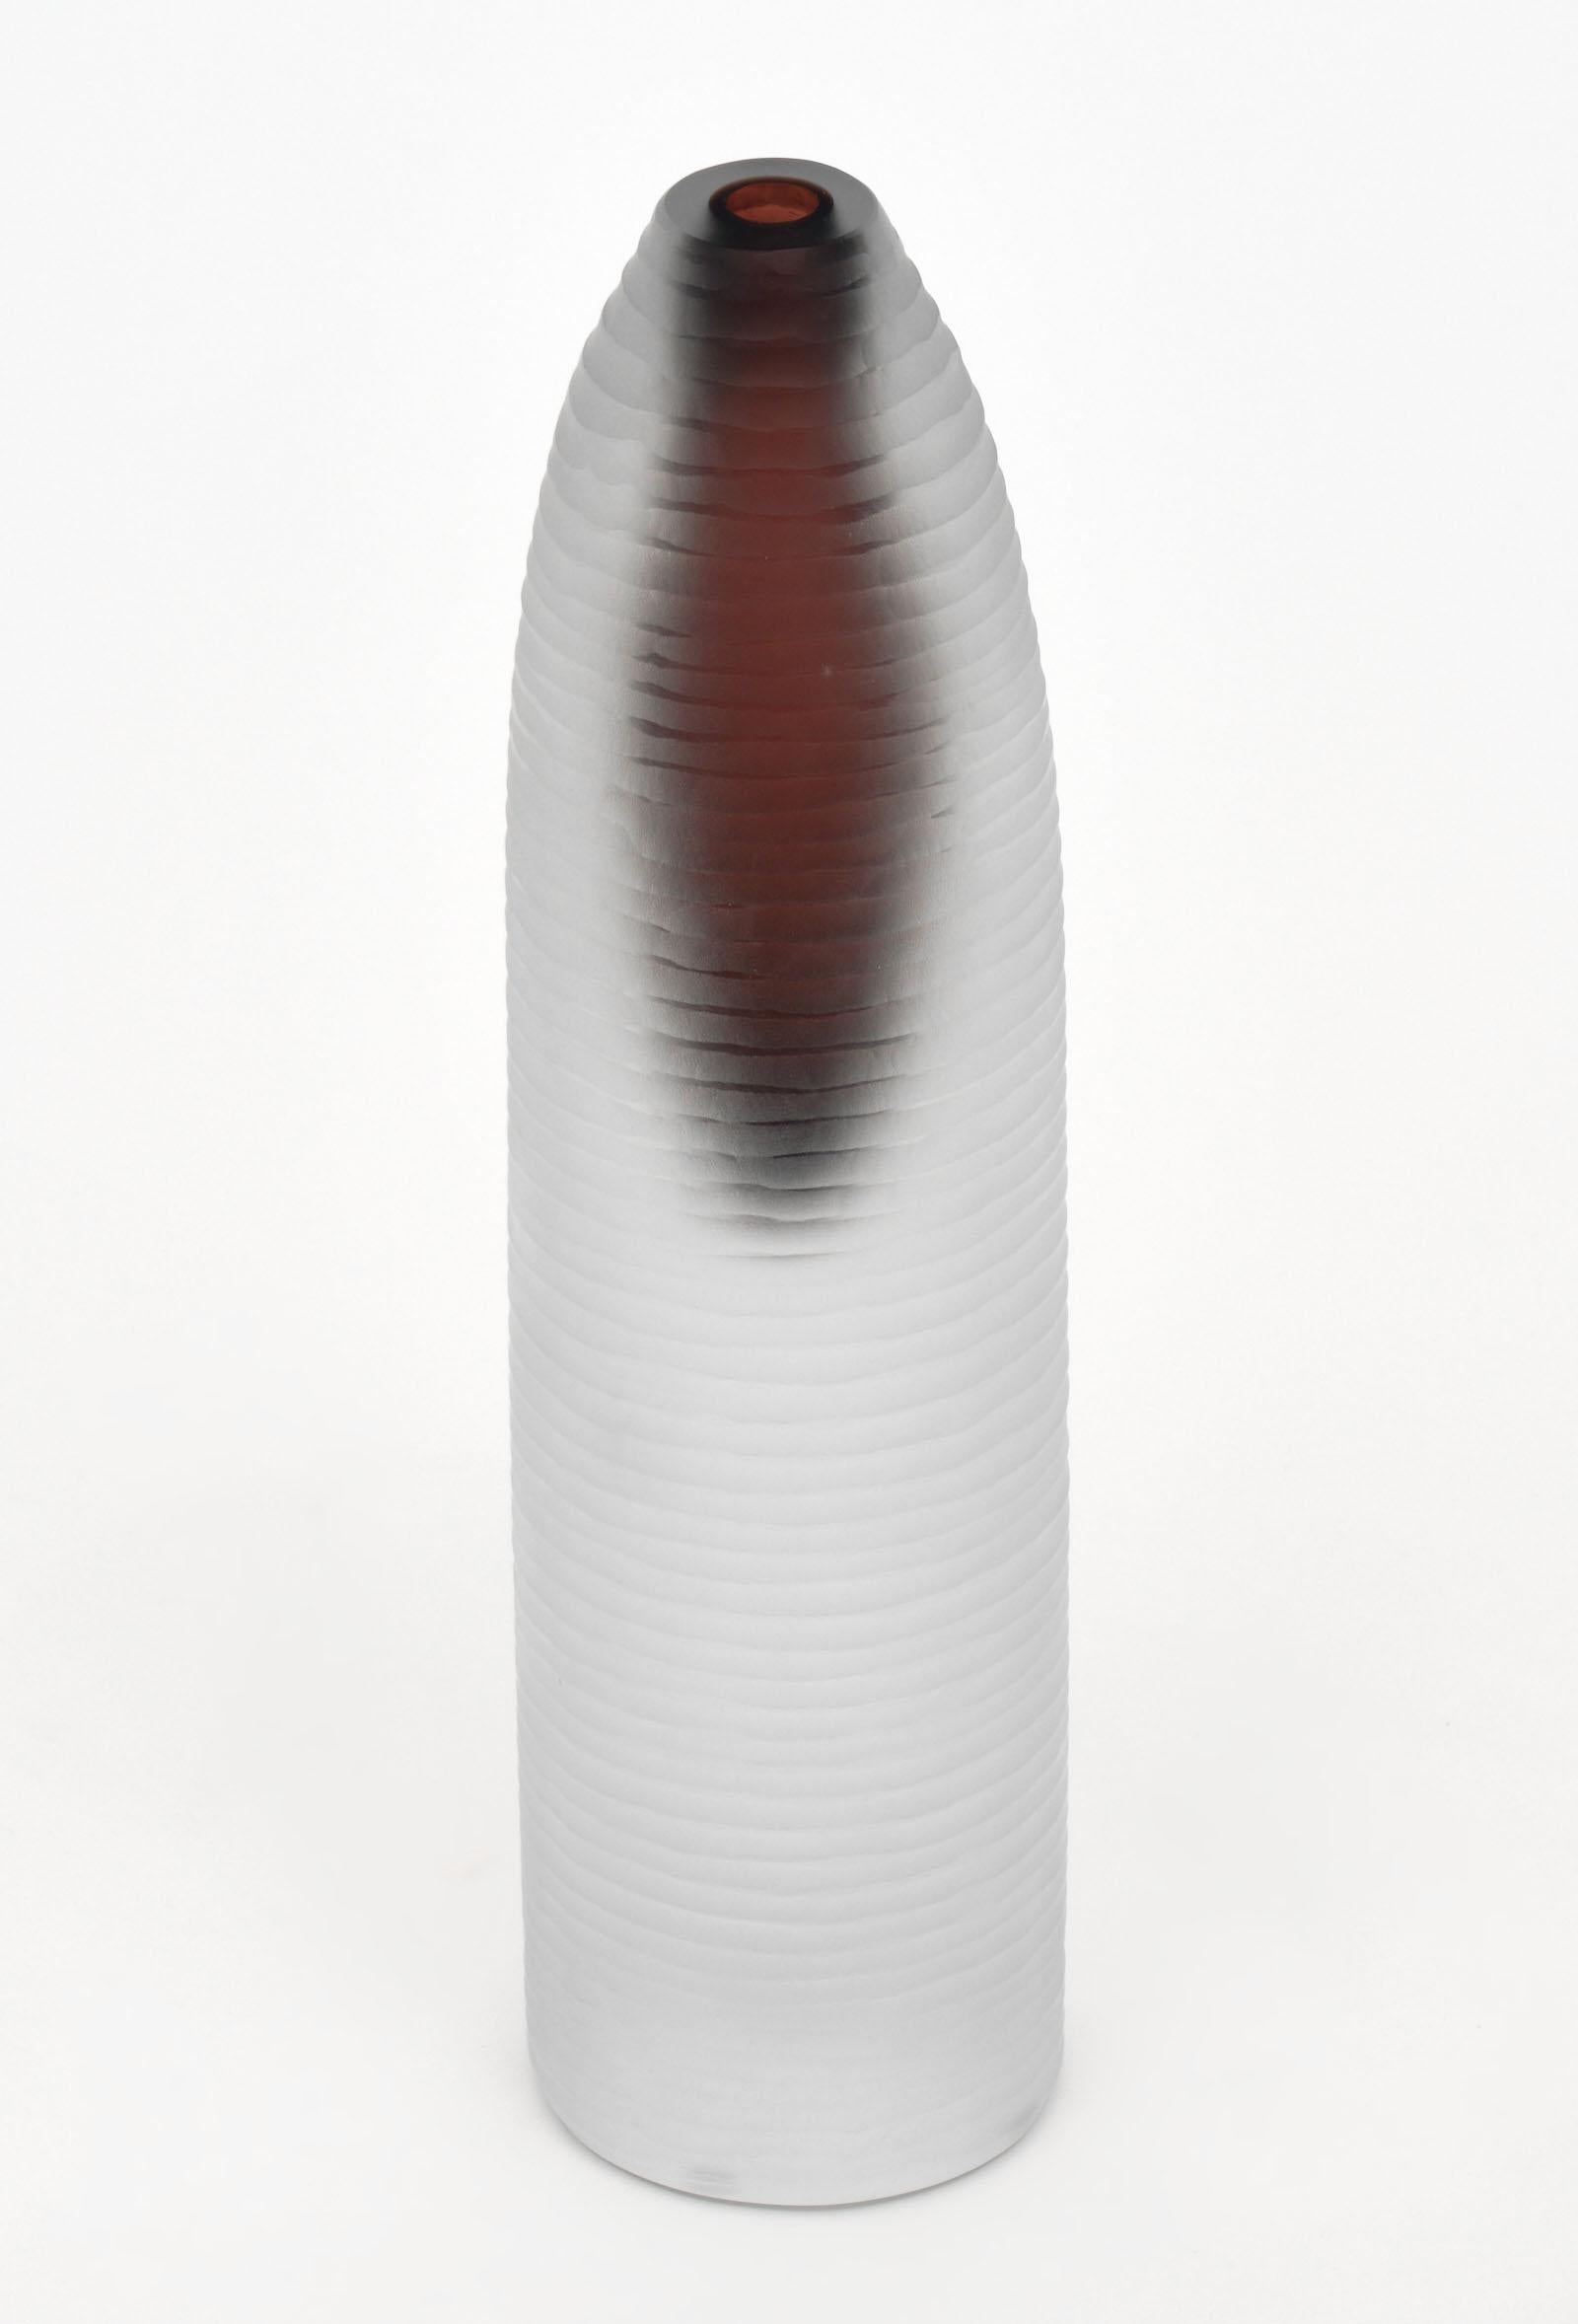 Contemporary Set of Three Murano Glass “Voda” Vases For Sale